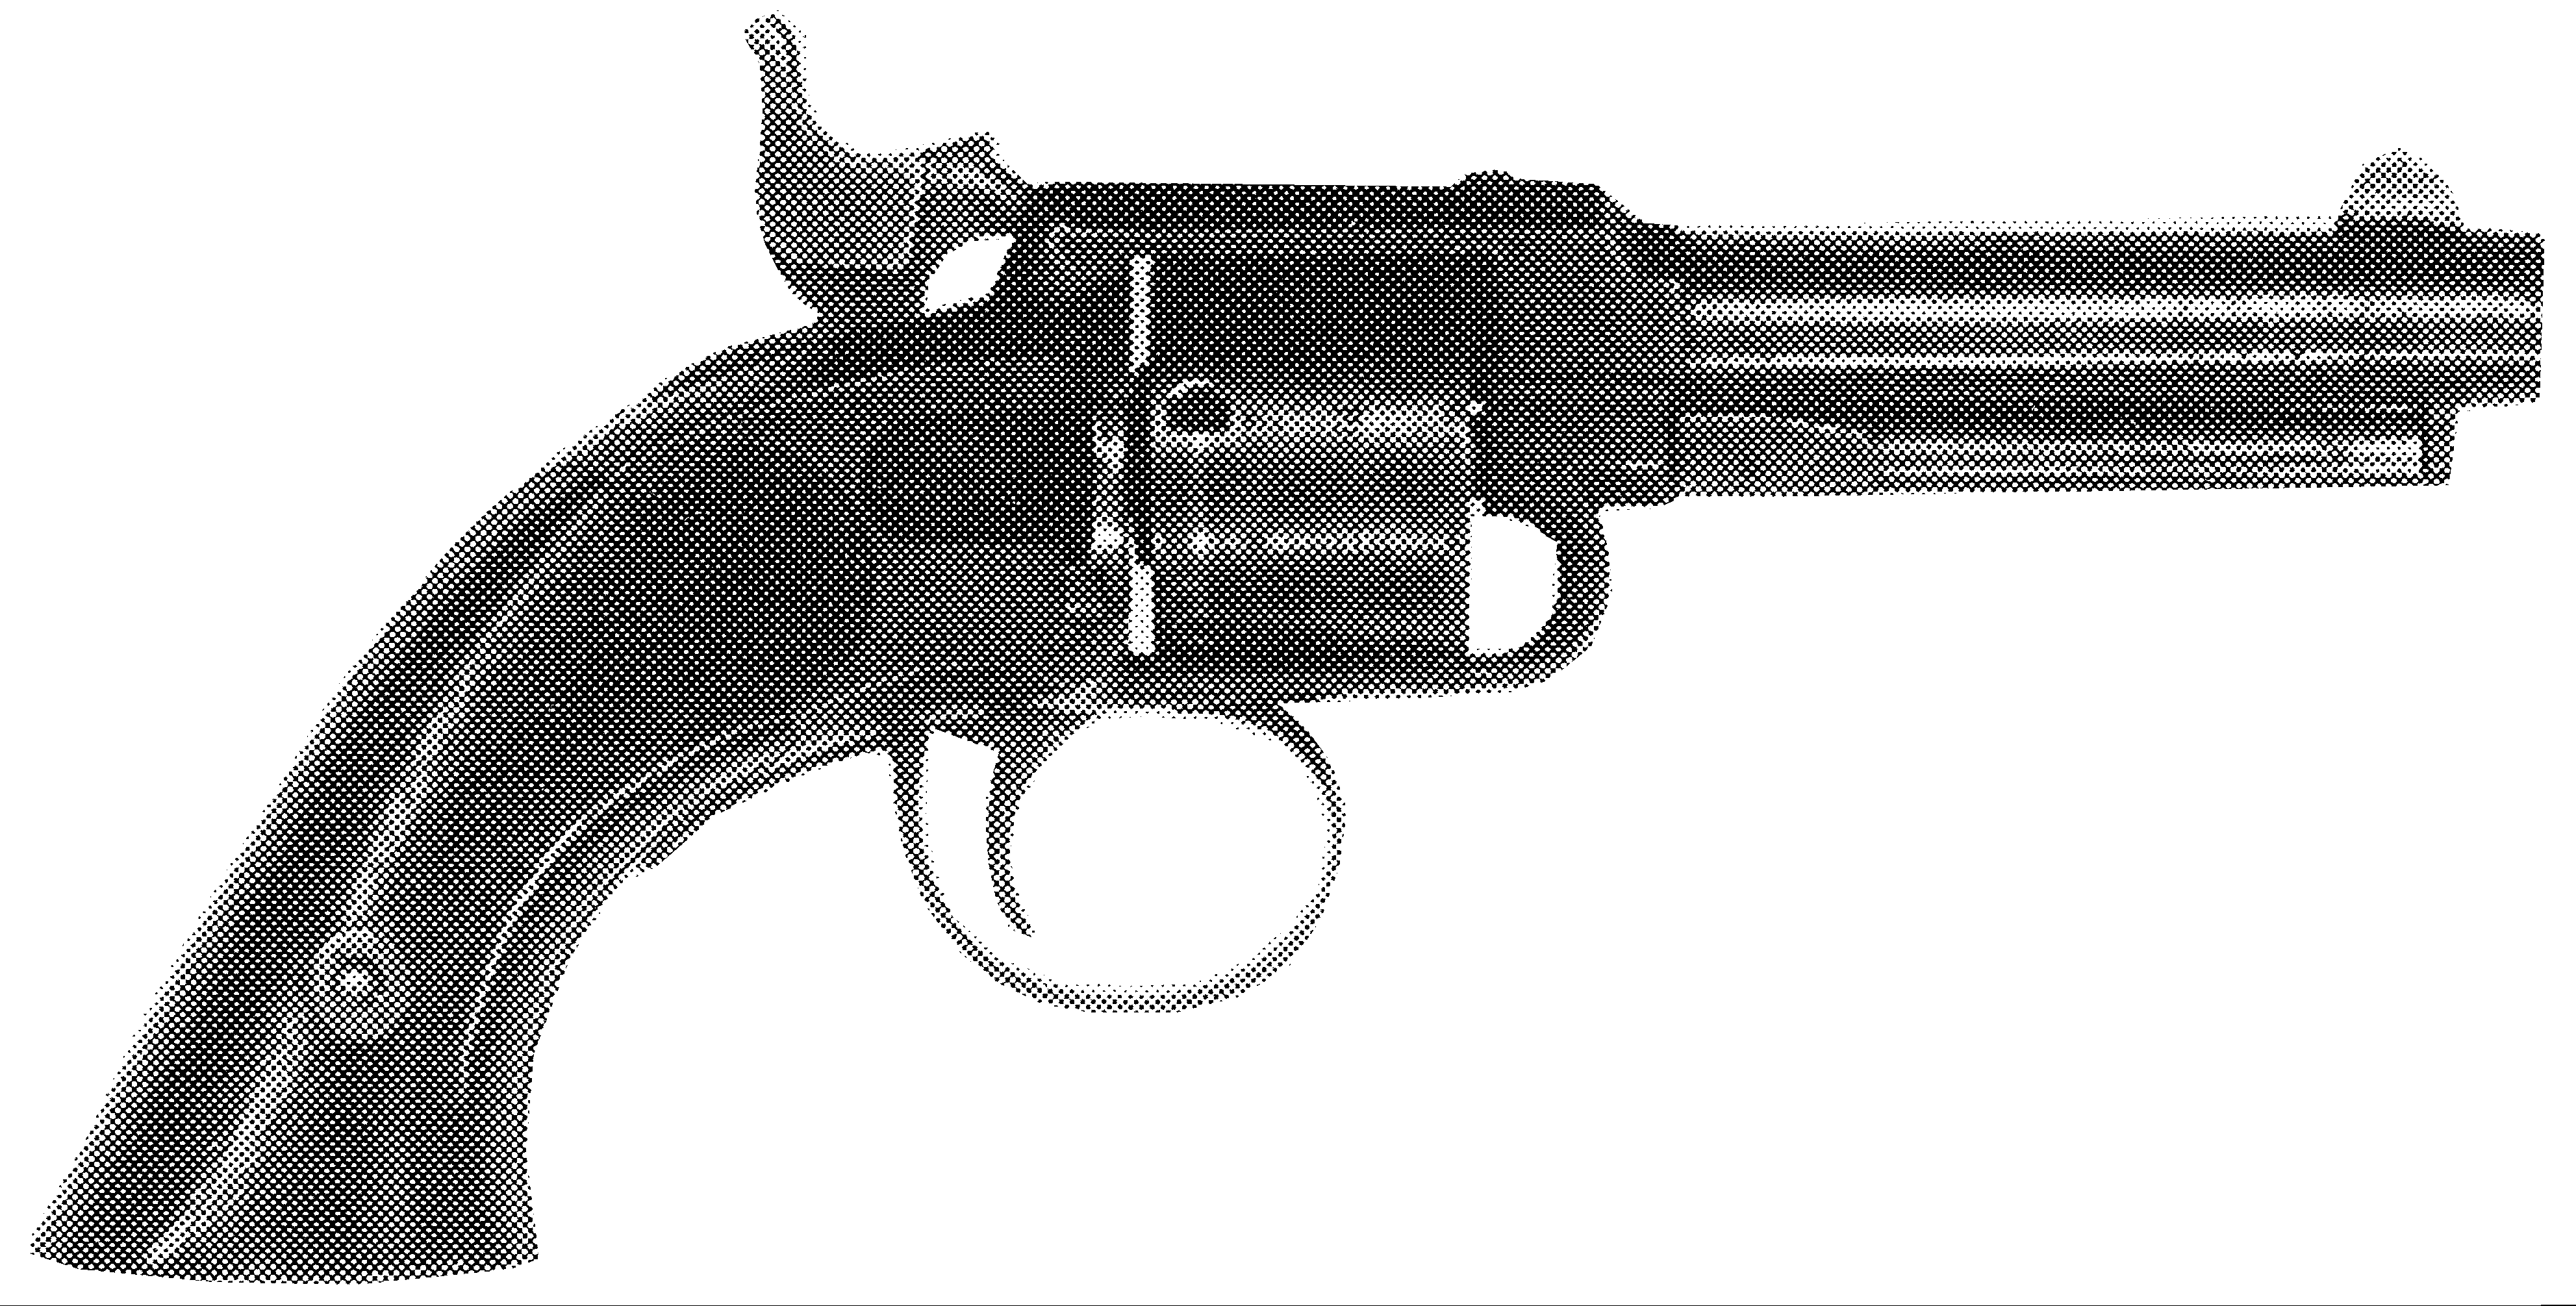 Belt Revolver